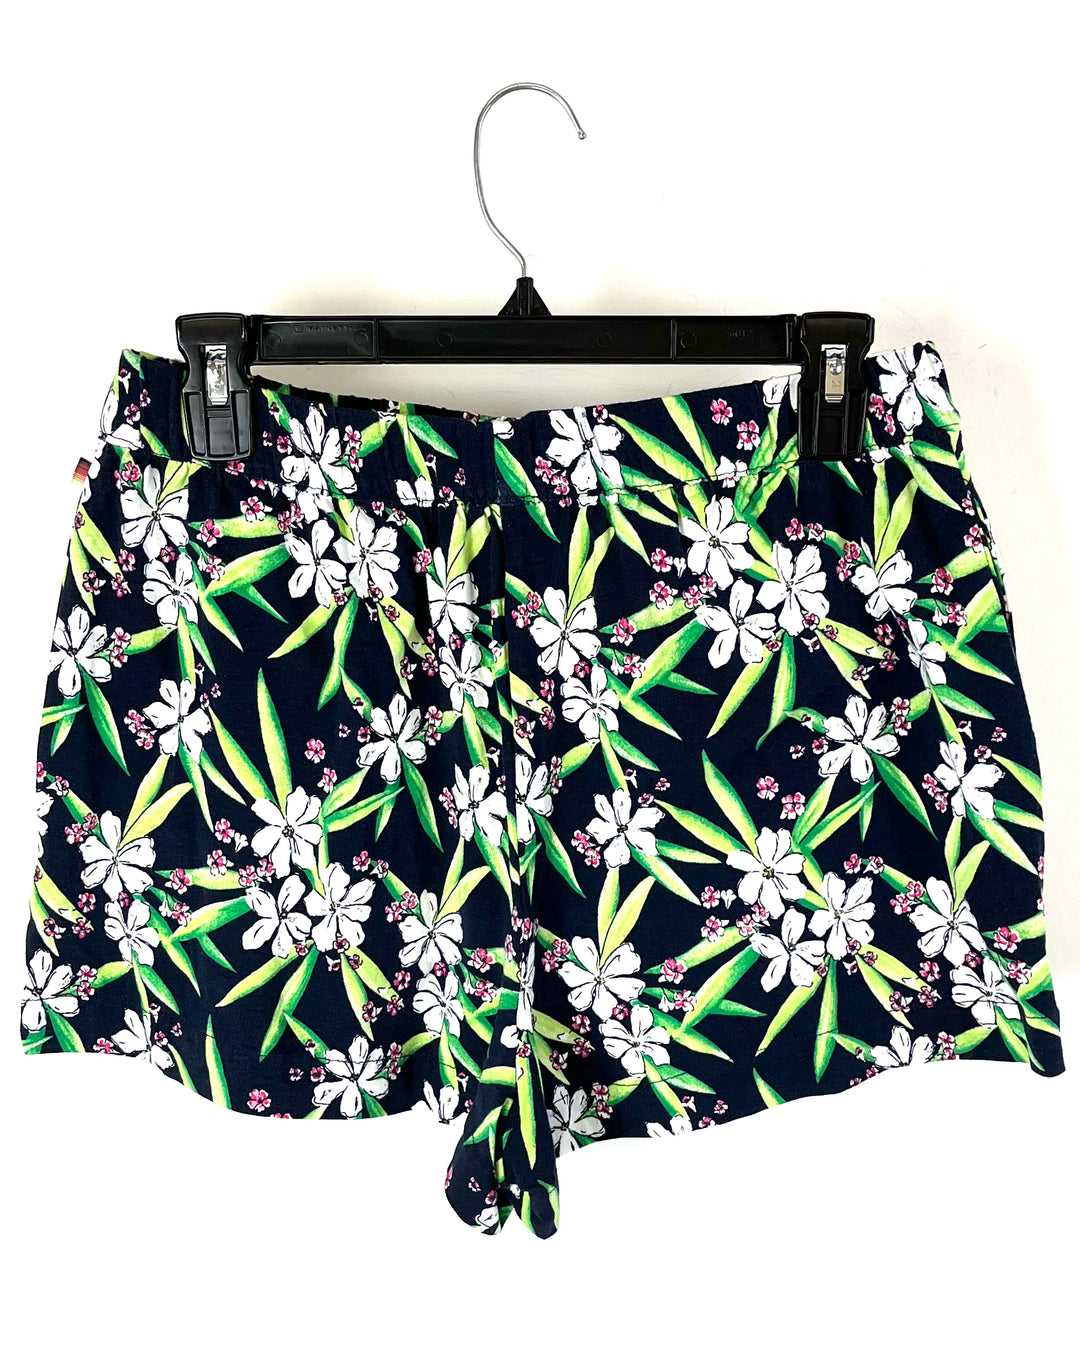 Green Floral Printed Sleepwear Shorts - Small